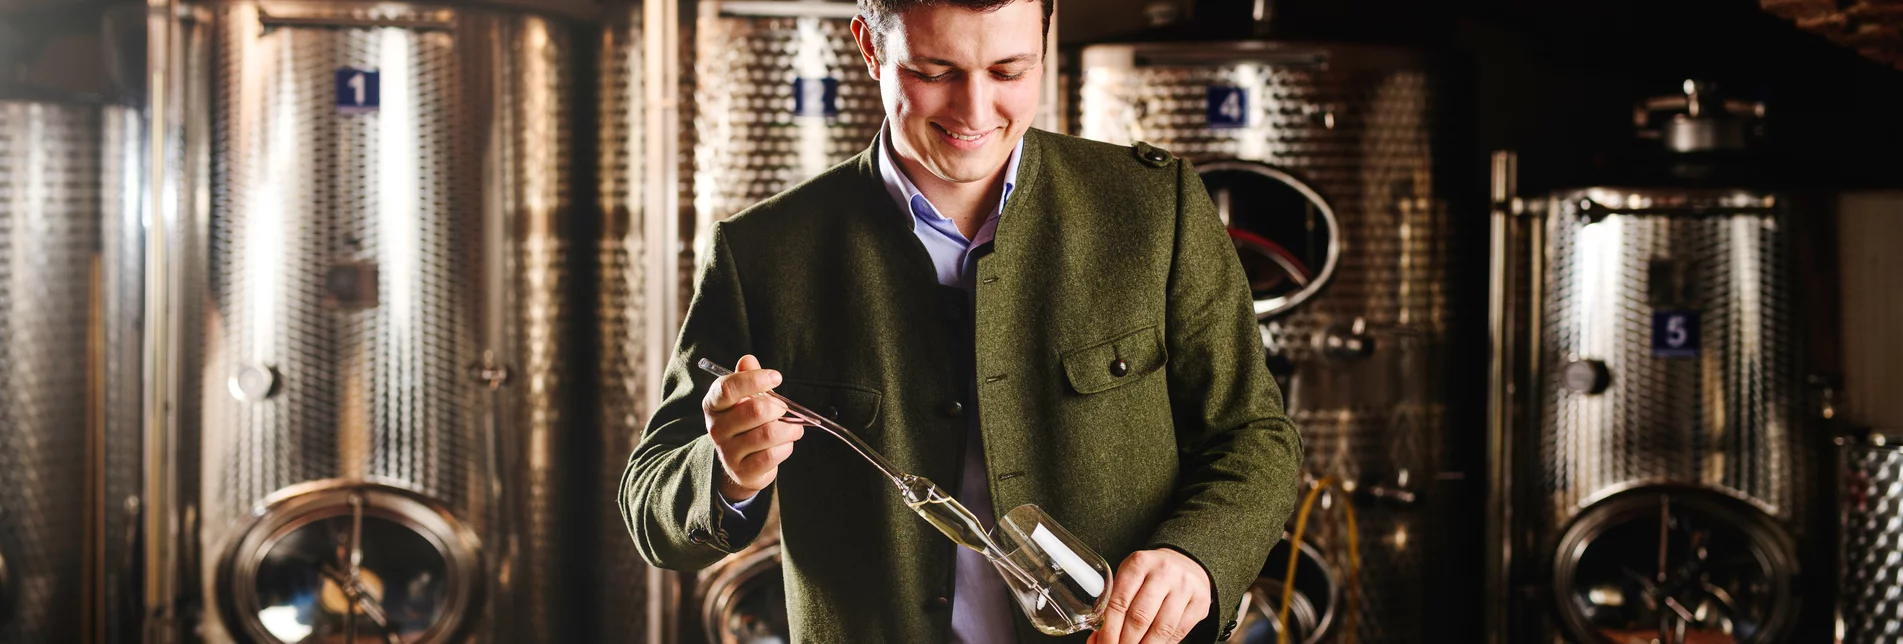 Franz Menhart tasting wine | © Südsteiermark | Michael Königshofer